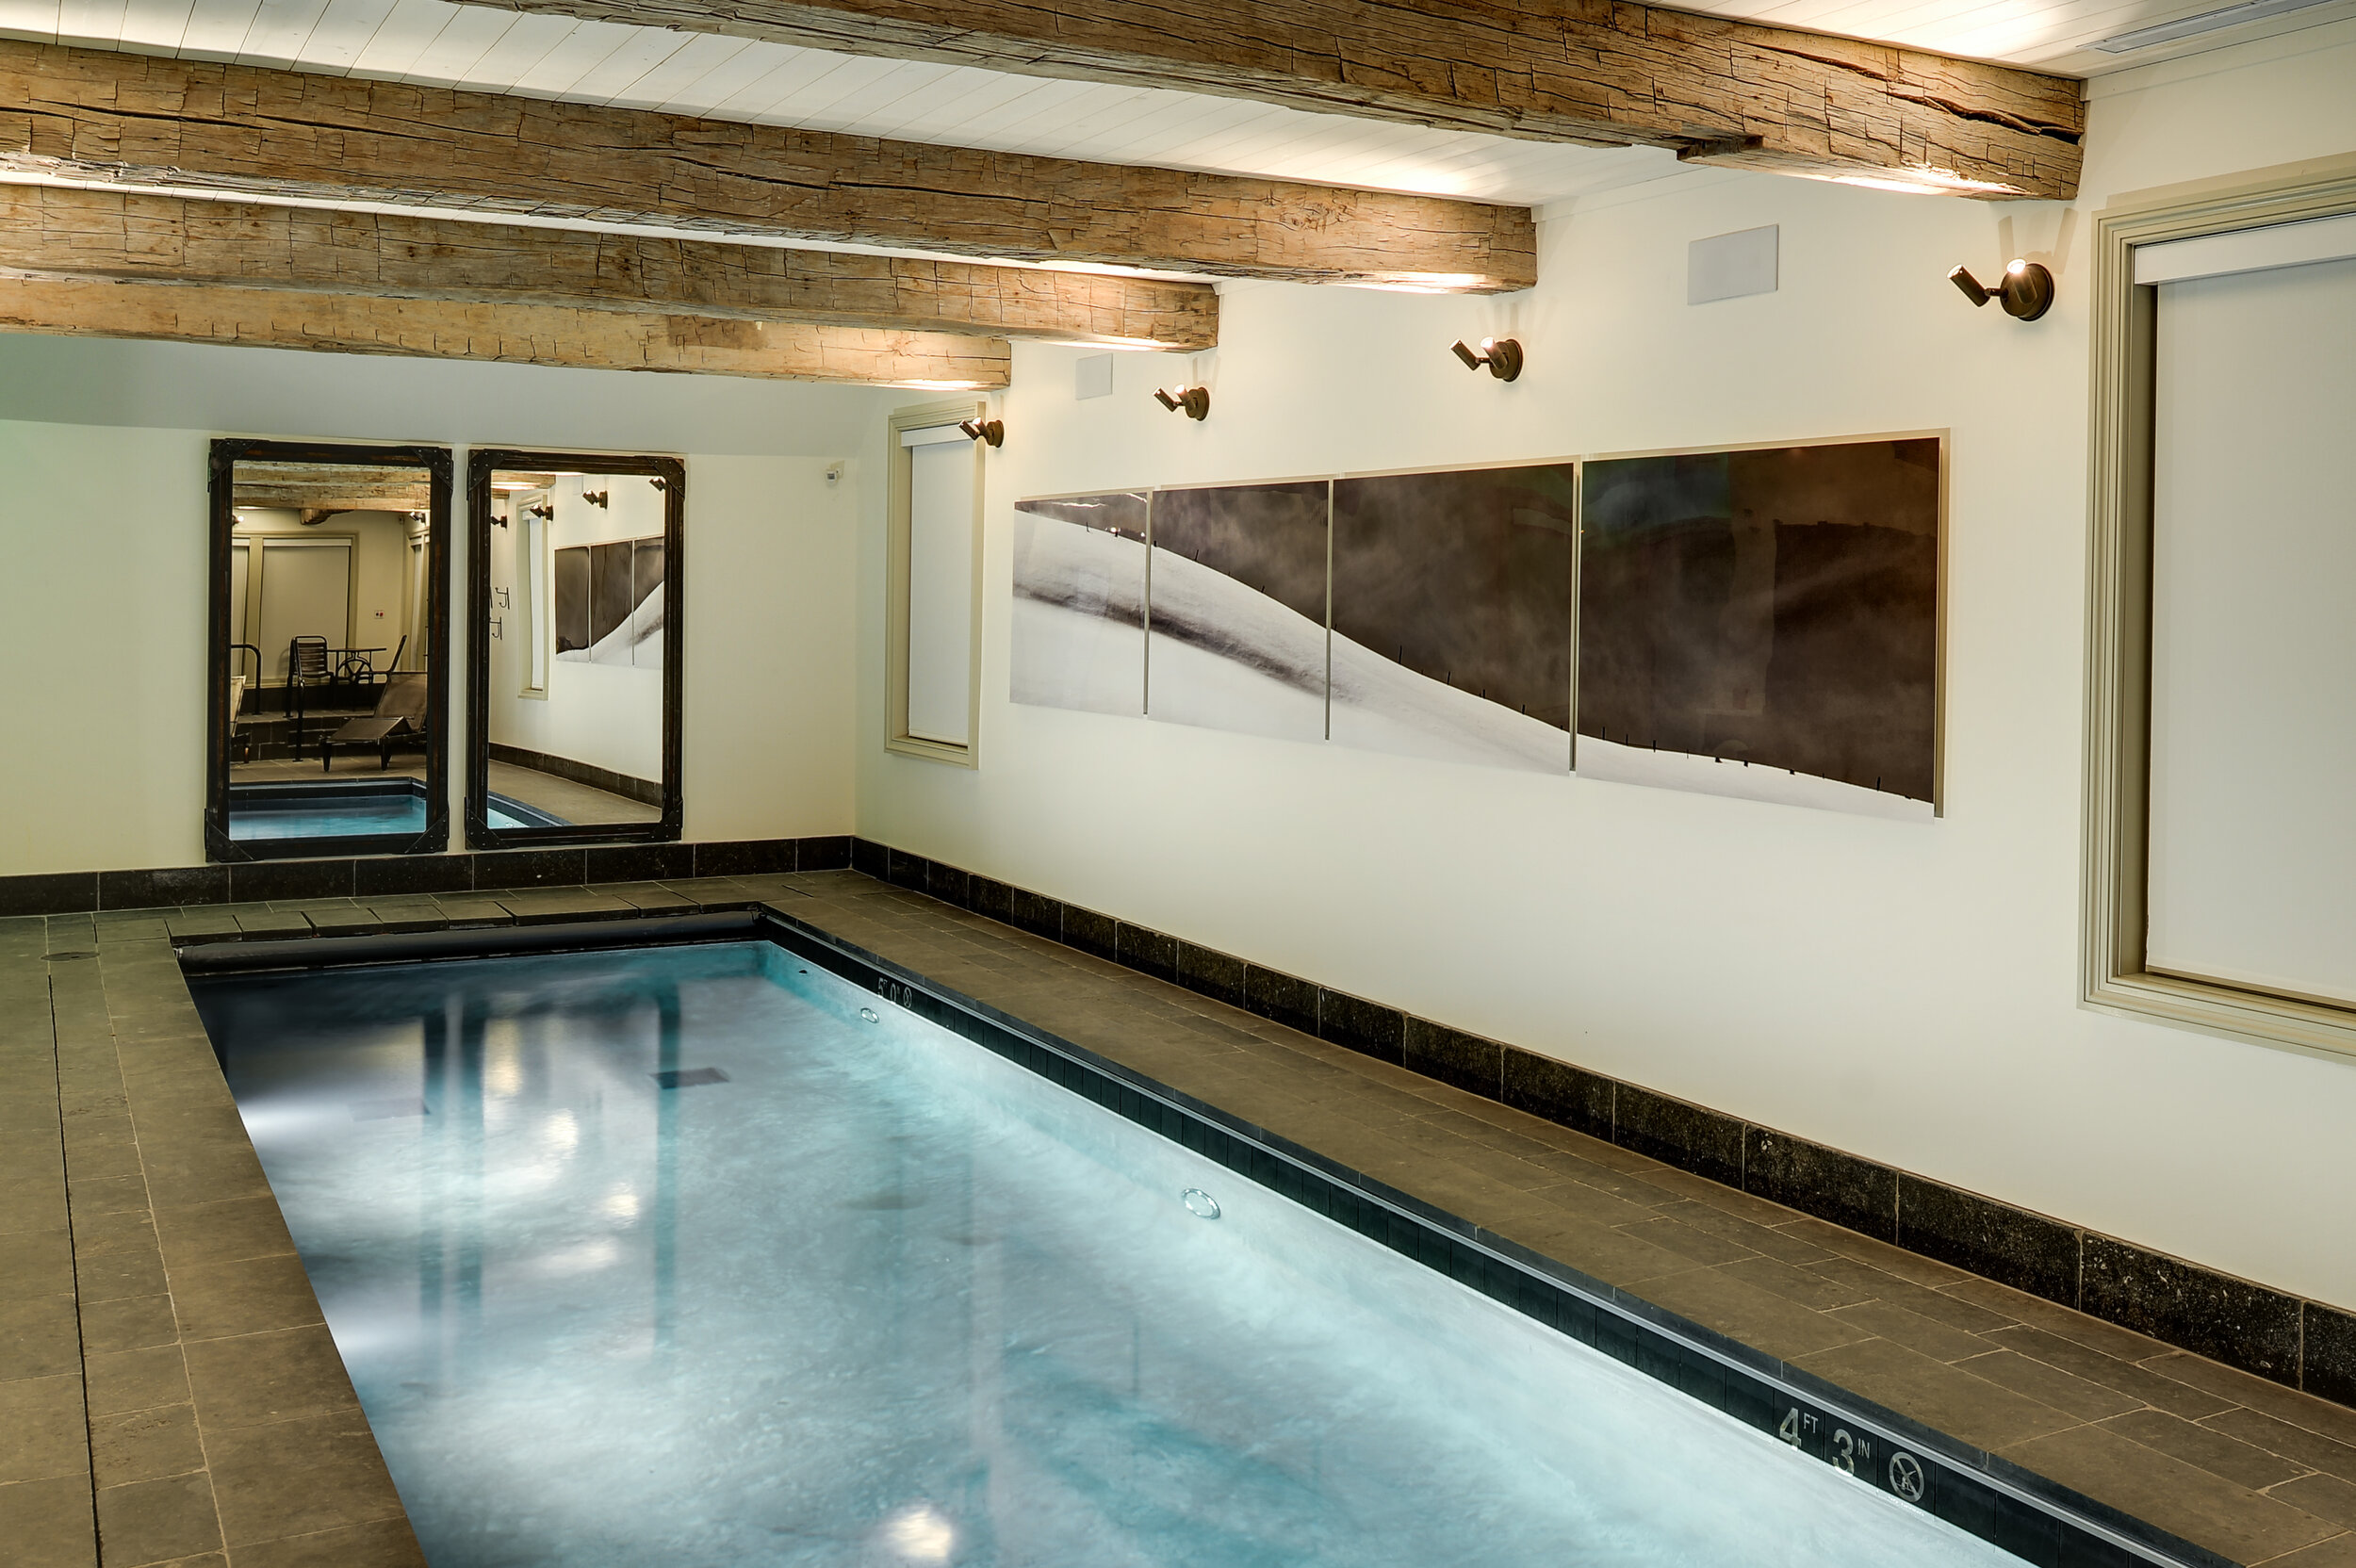   Scarp Ridge Lodge’s indoor pool (photo credit: Eleven Experience)  